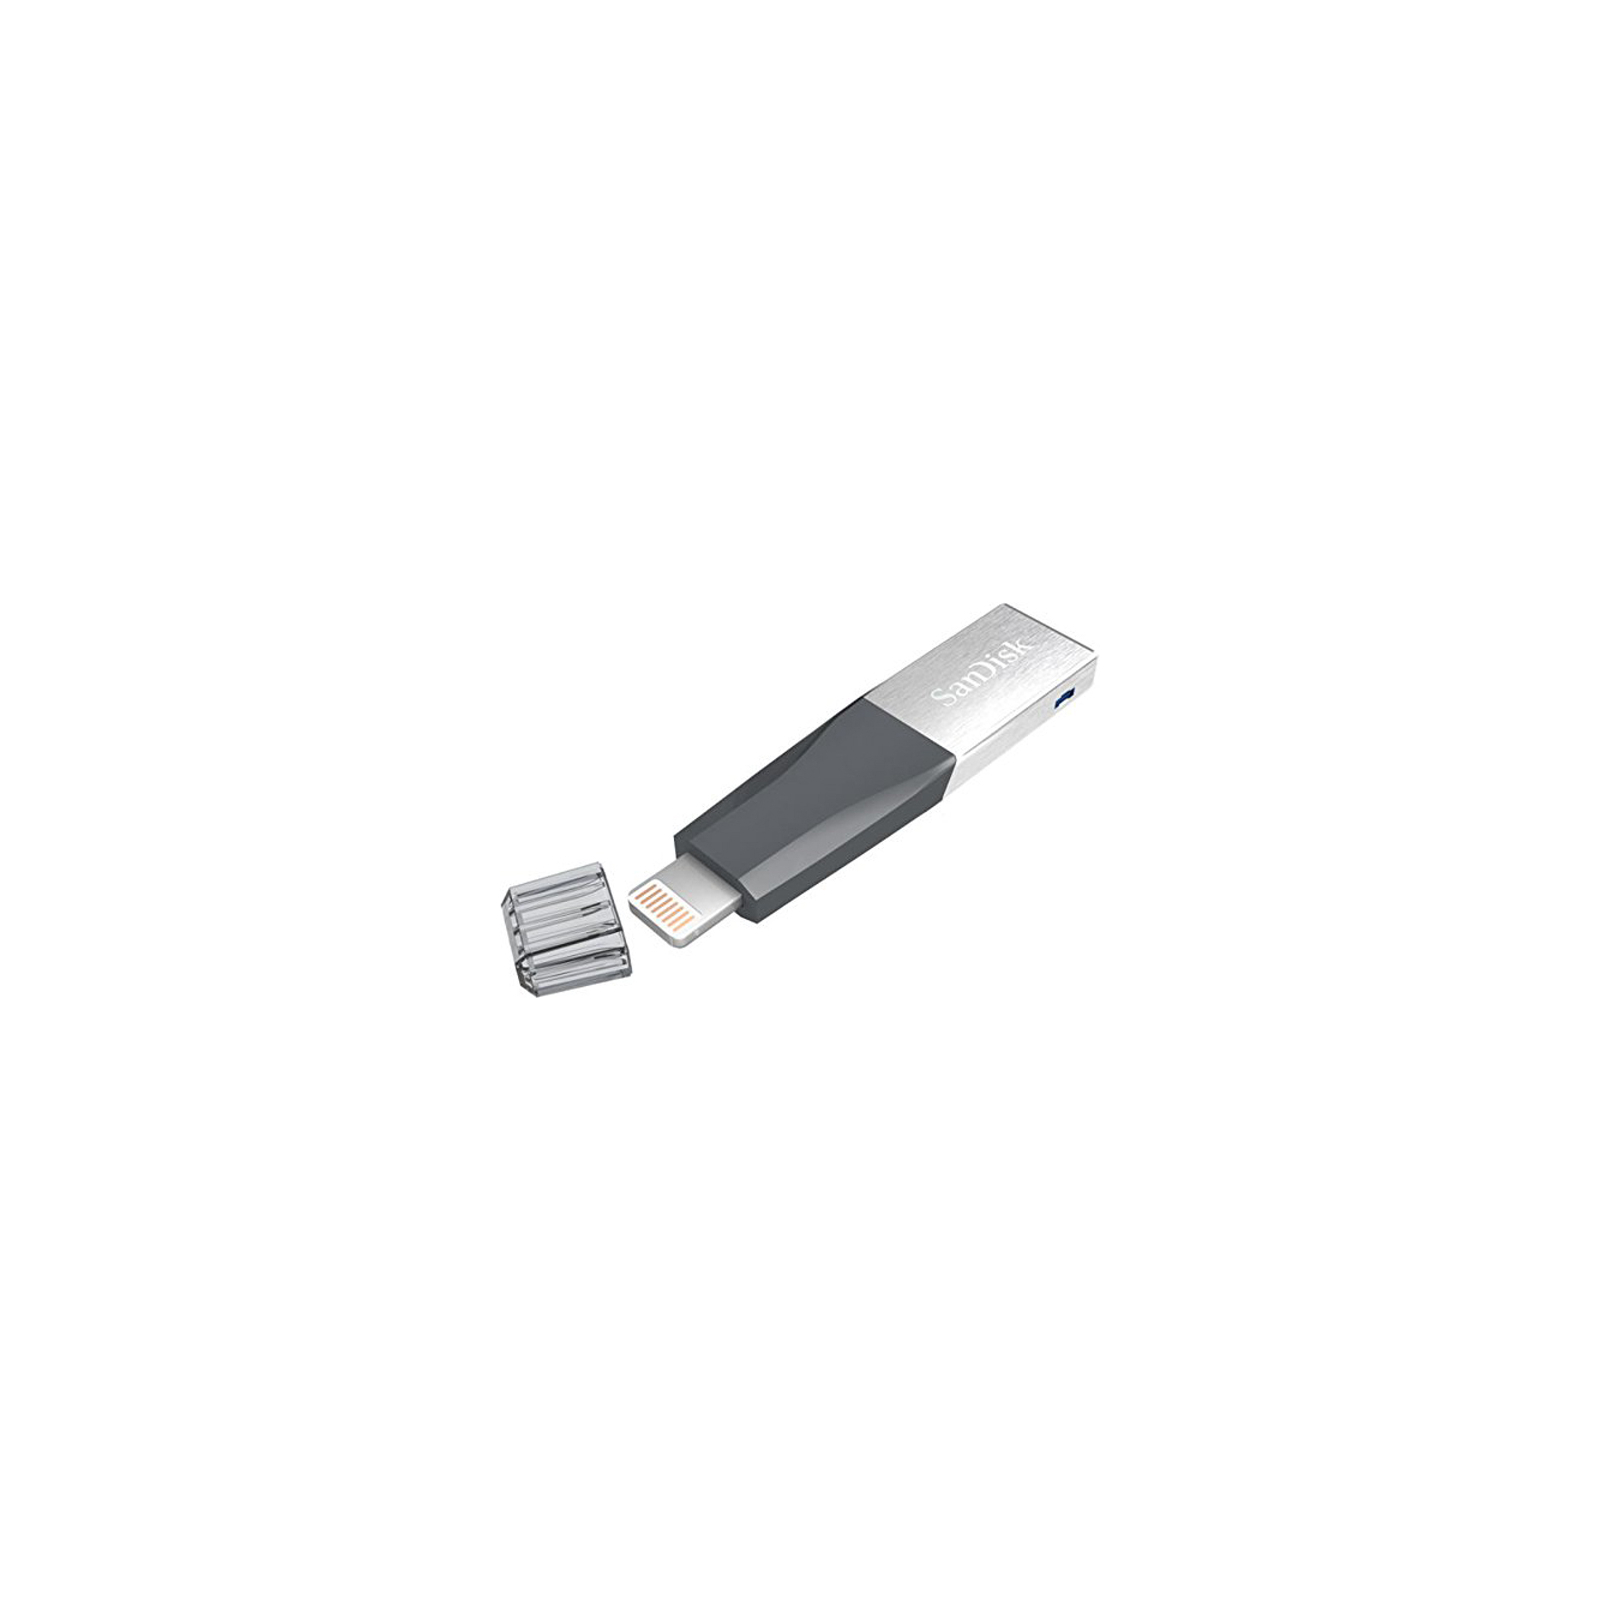 USB флеш накопитель SanDisk 64GB iXpand Mini USB 3.0/Lightning (SDIX40N-064G-GN6NN) изображение 5